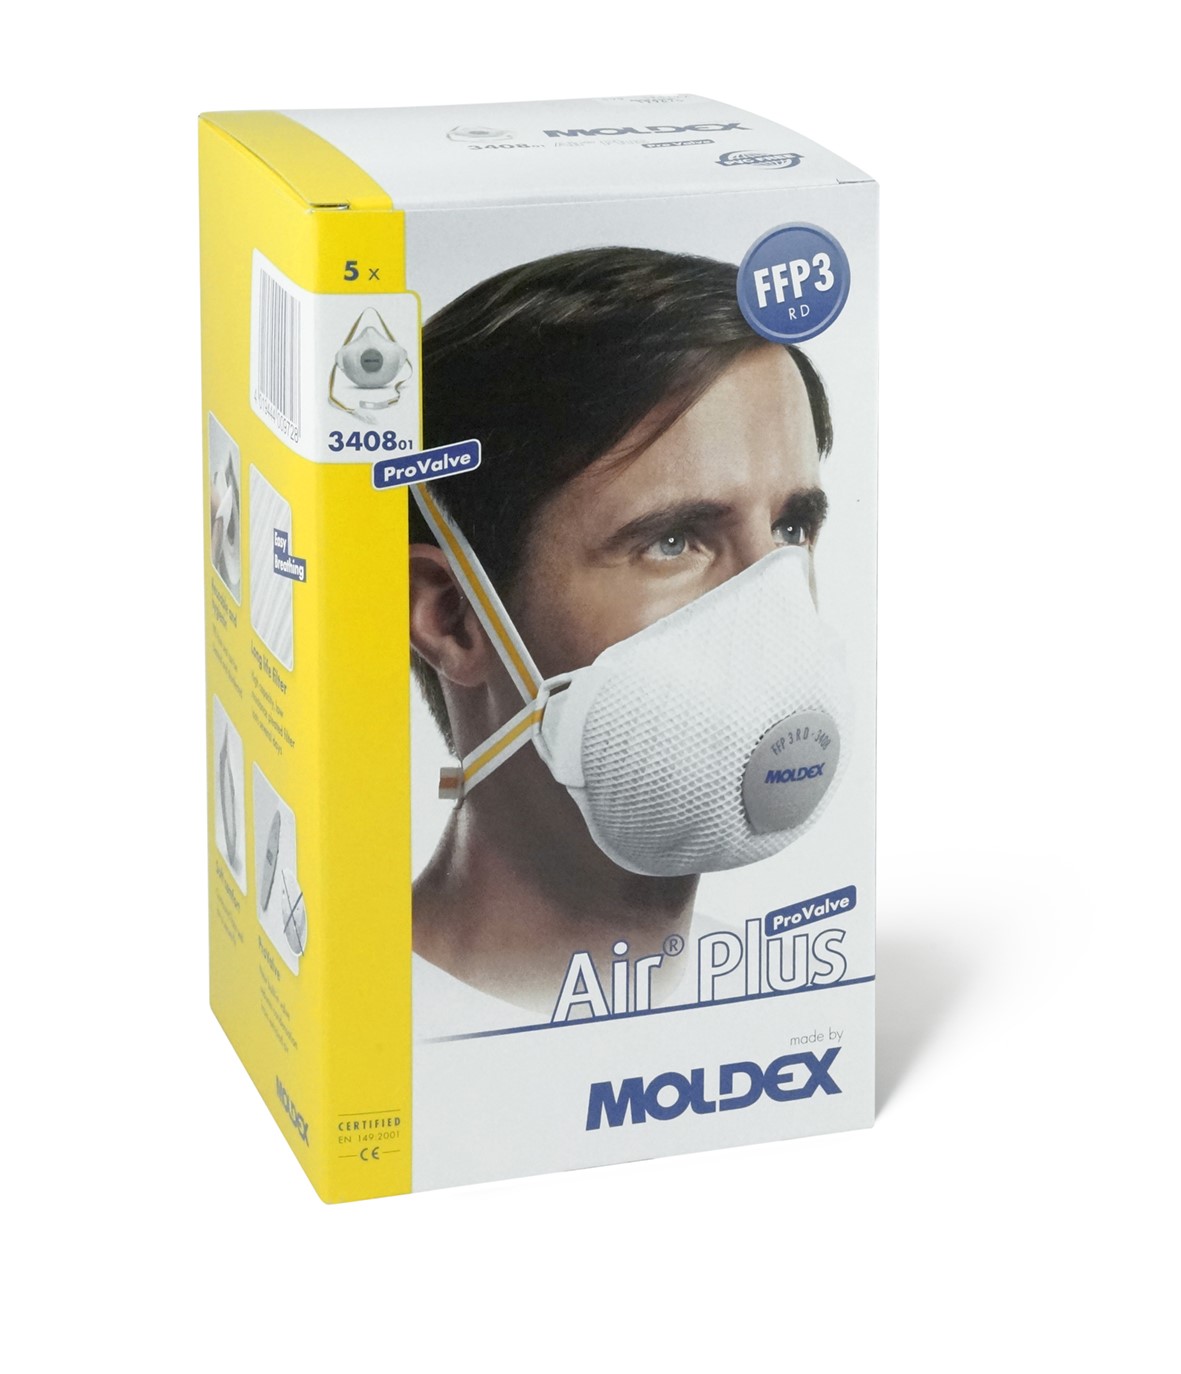 Moldex 3408 Air Plus  ProValve FFP3 Masks x 5